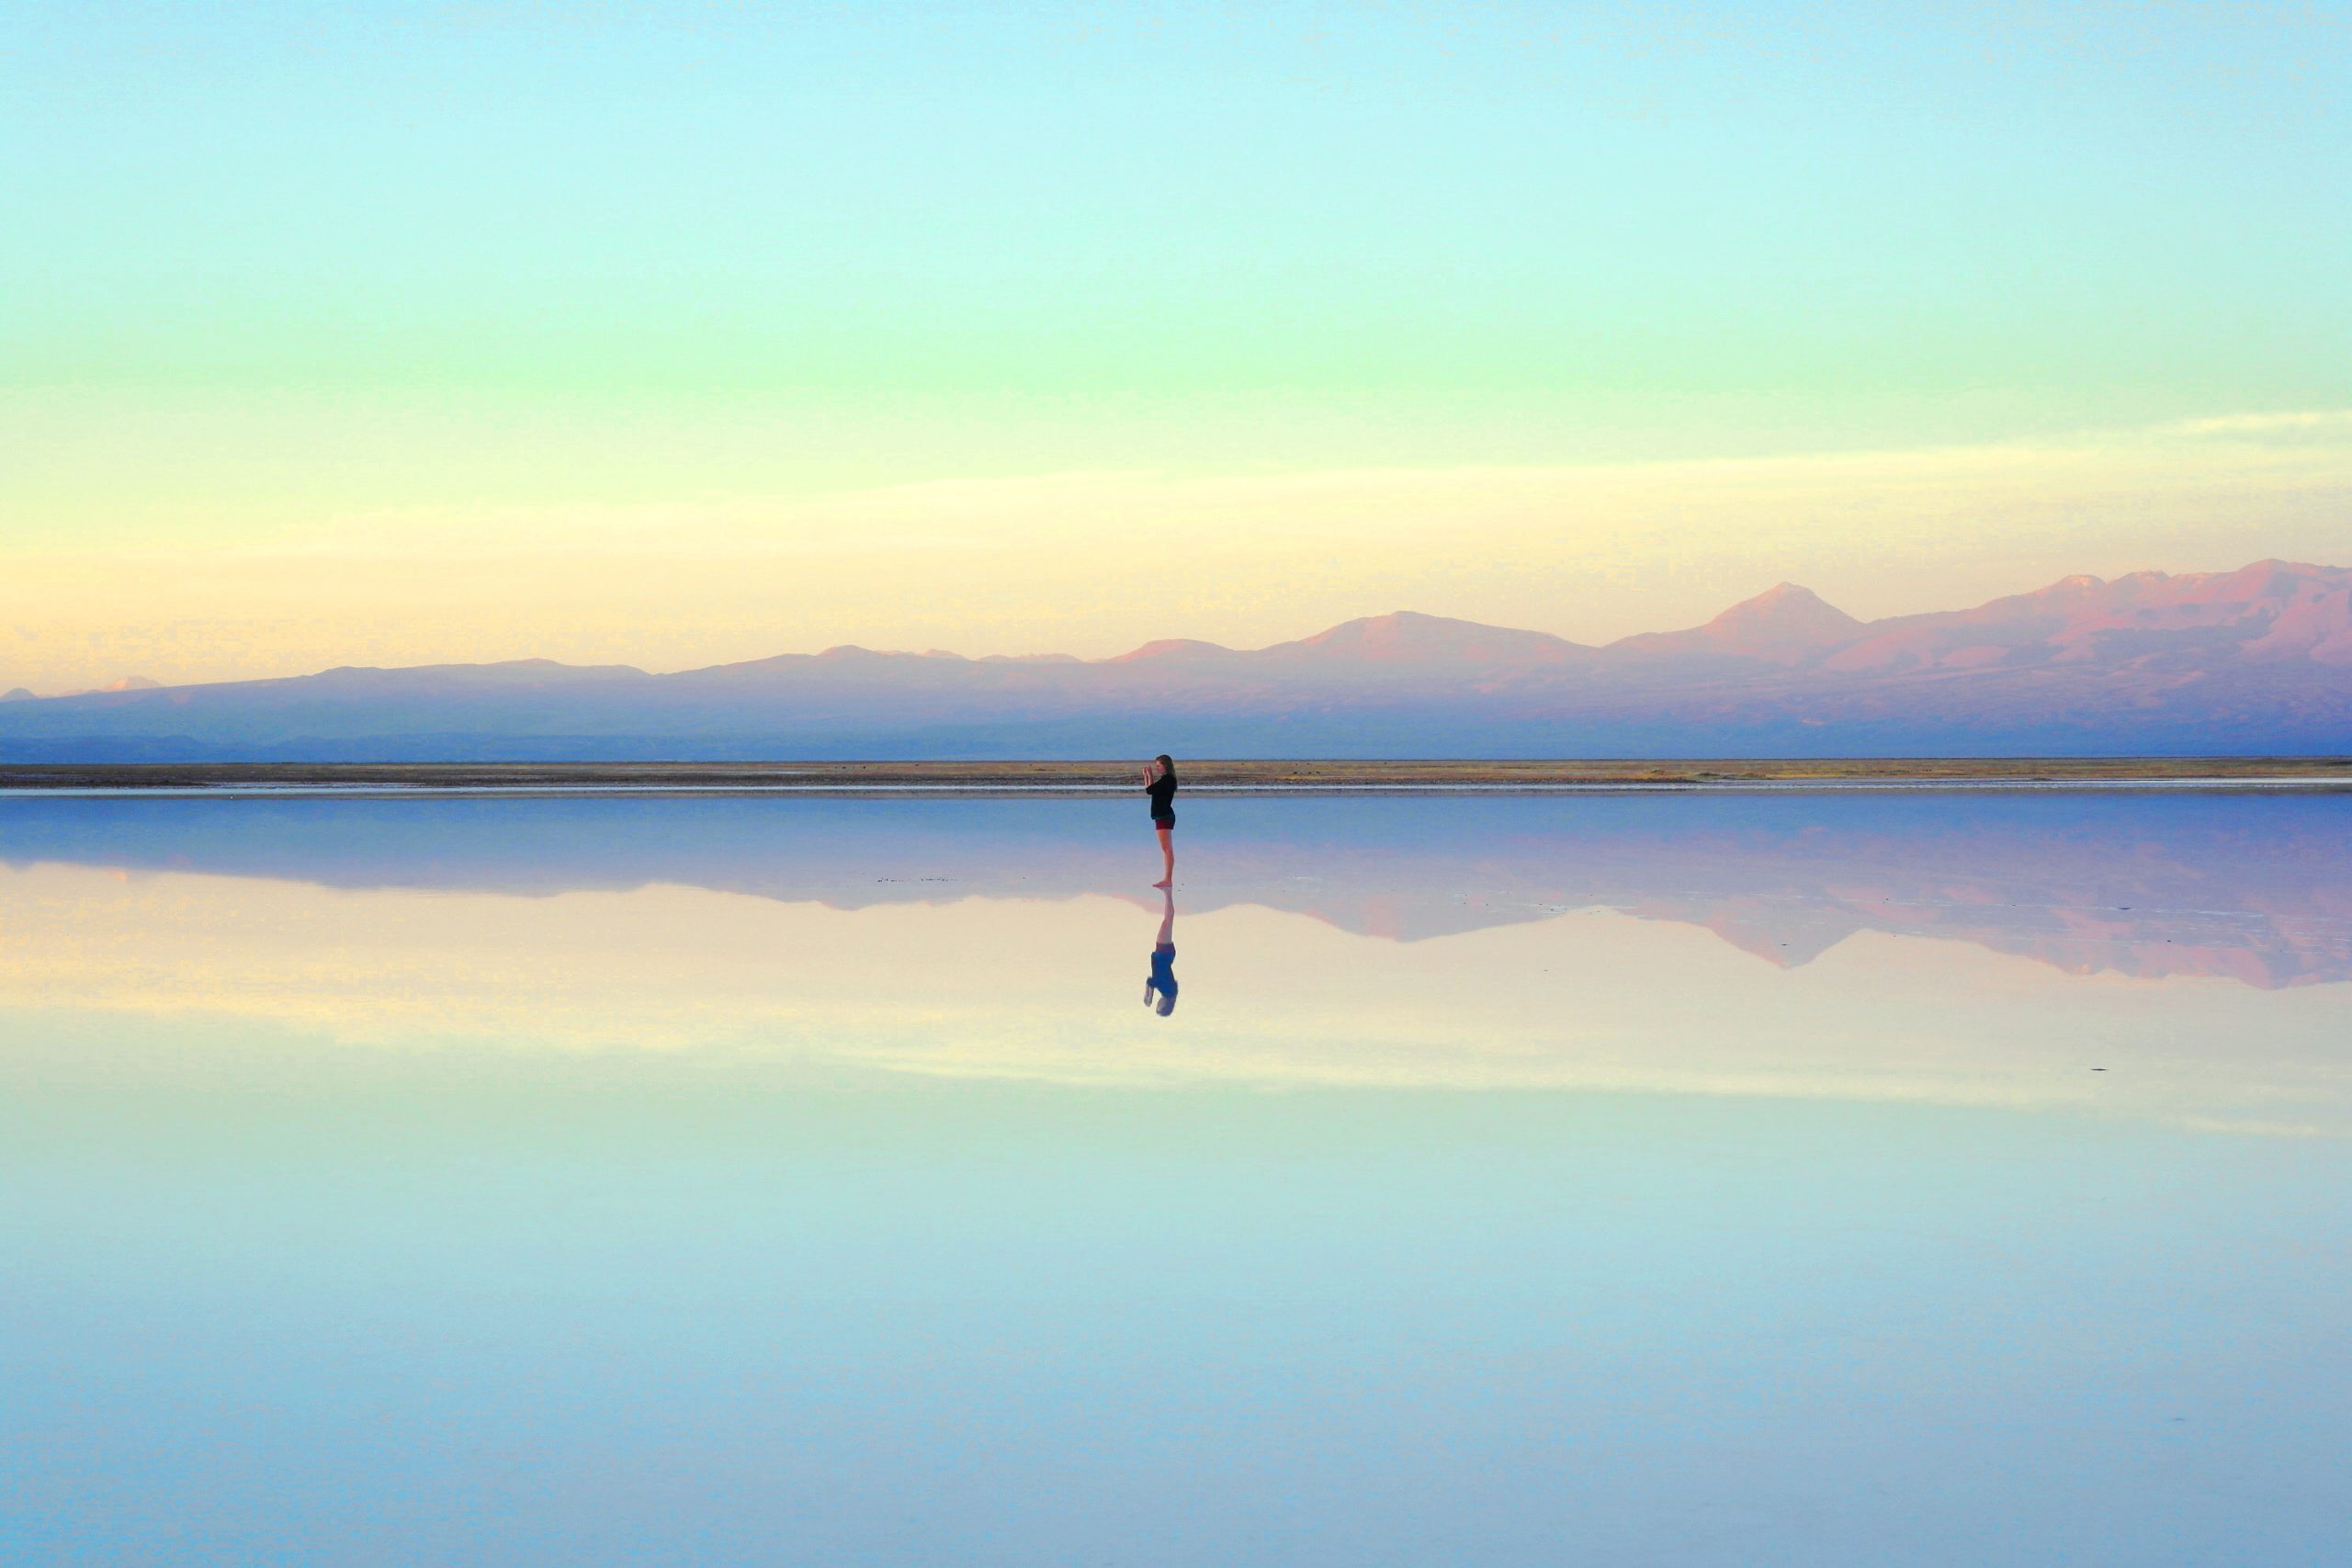 Woman standing near water | Photo by José M. Reyes on Unsplash